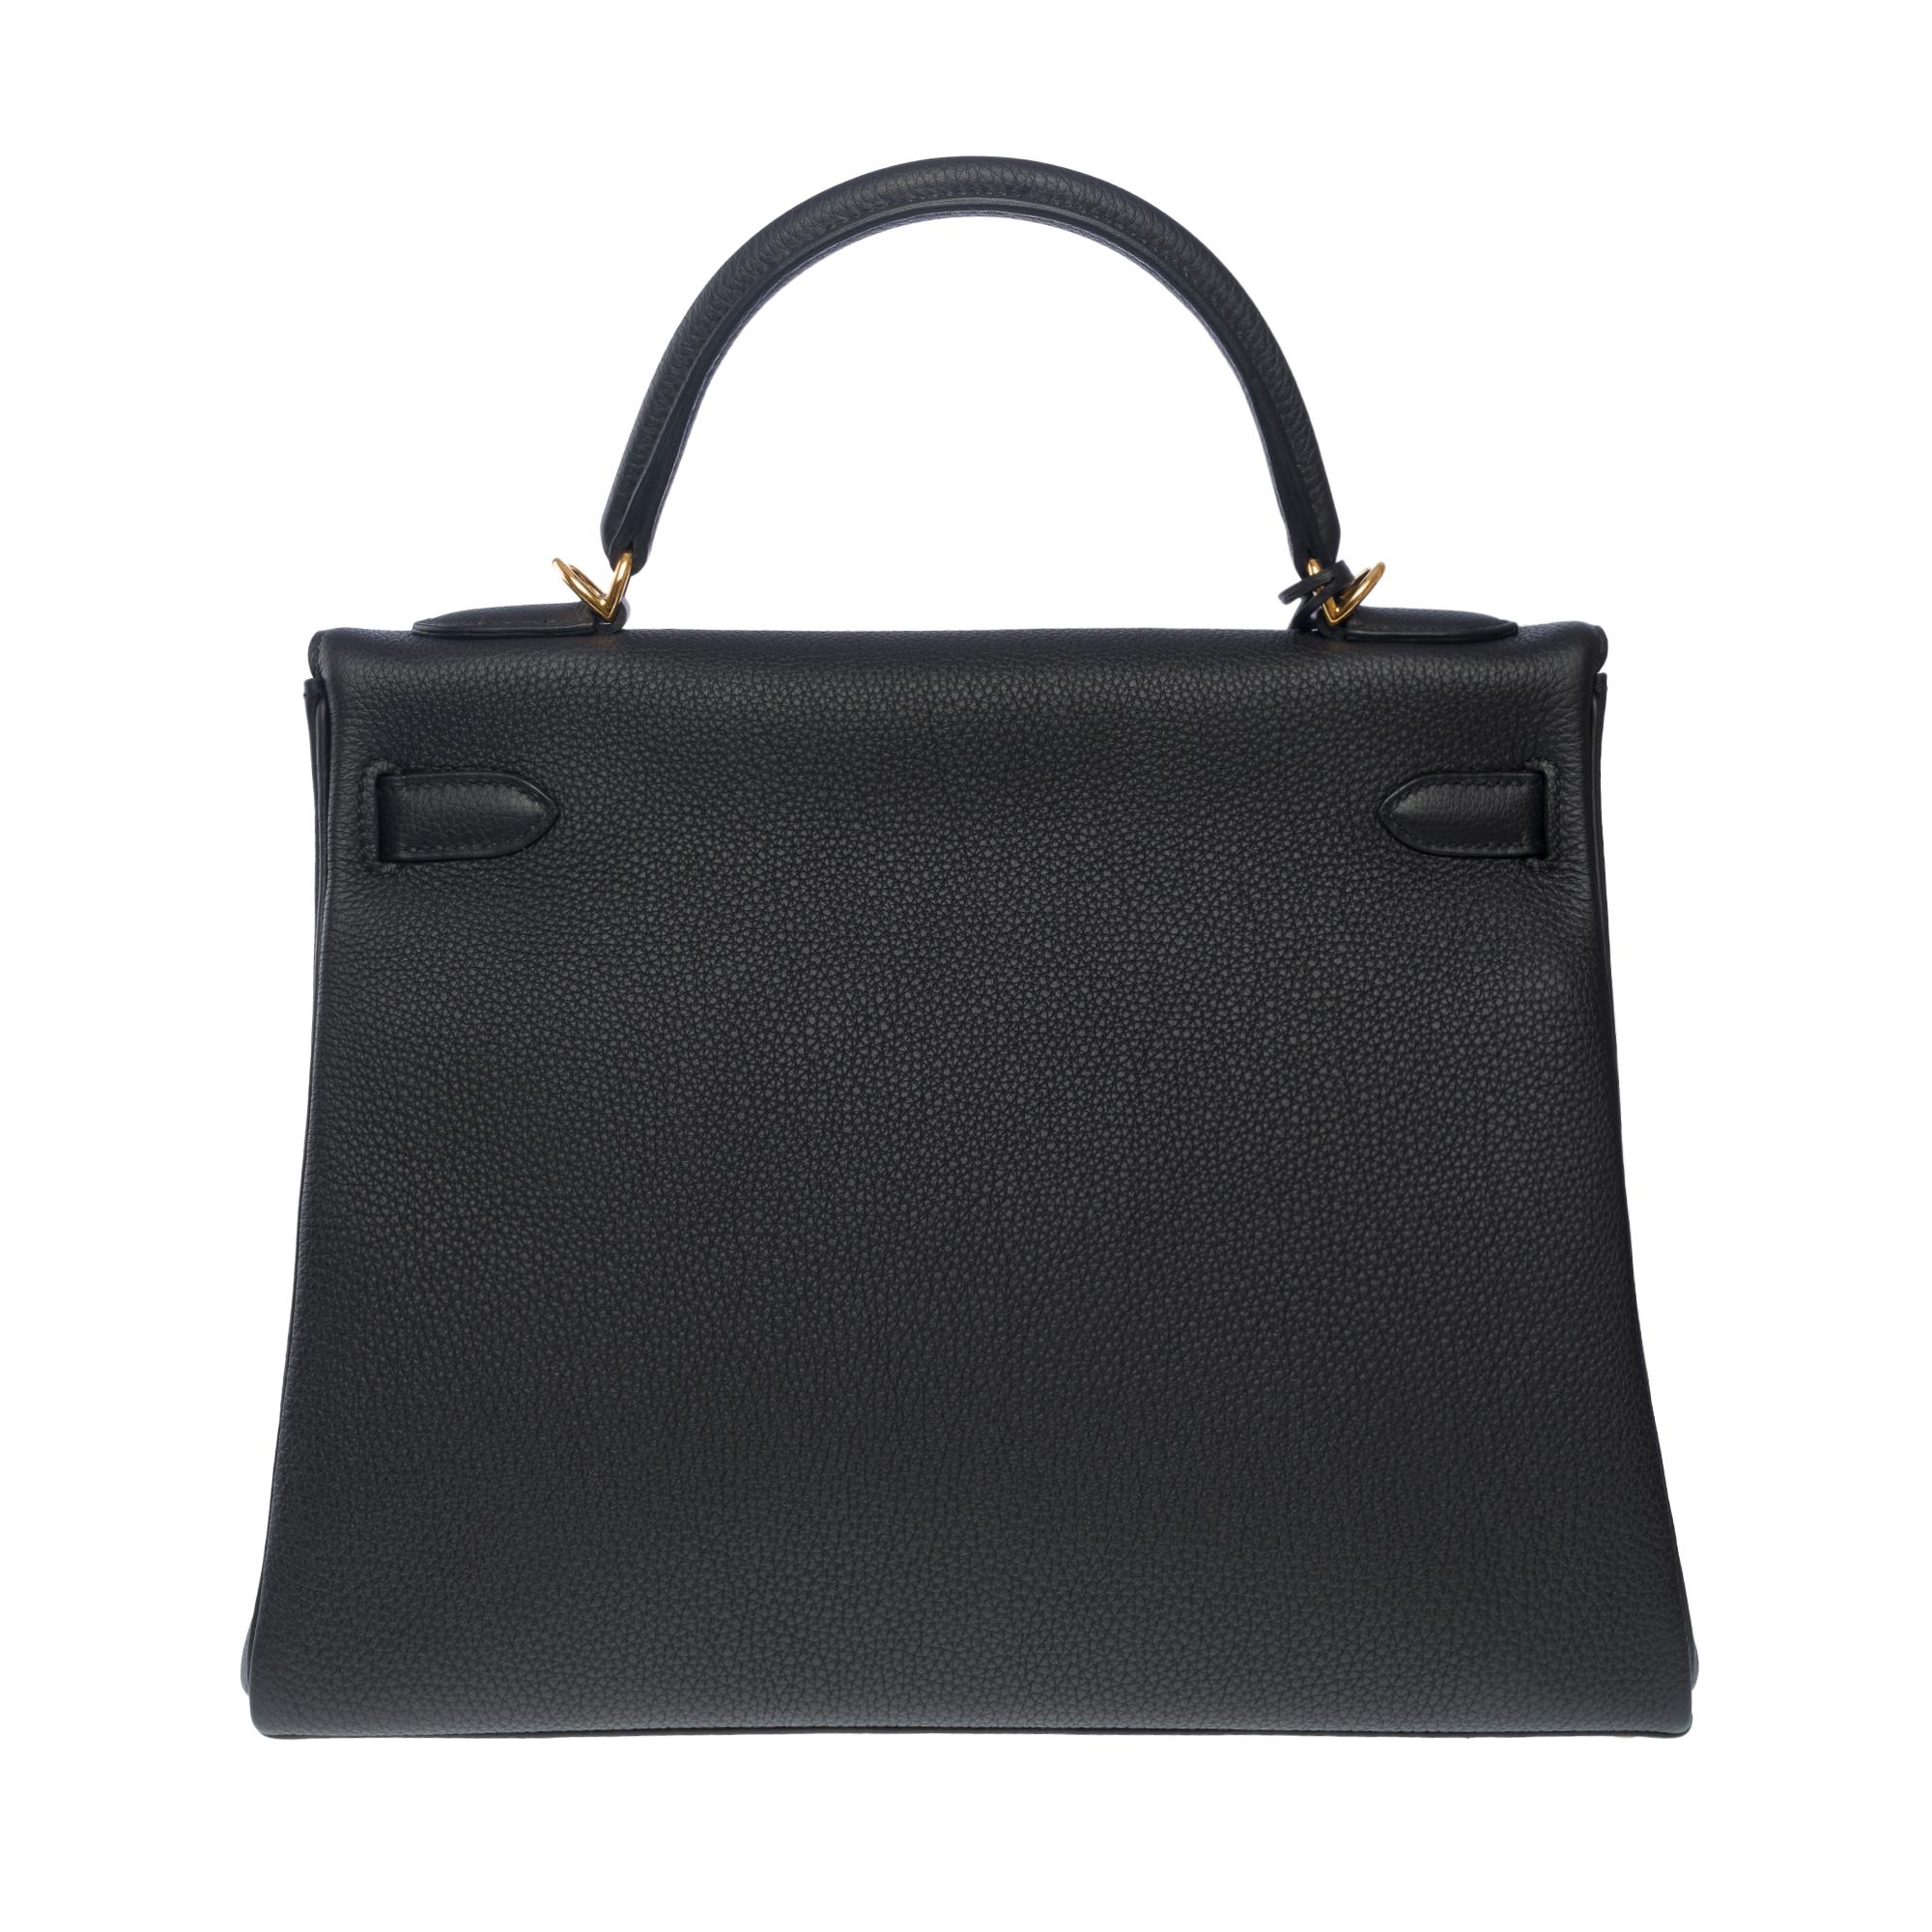 Women's New Hermès Kelly 32 retourne handbag strap in Black Togo leather, GHW